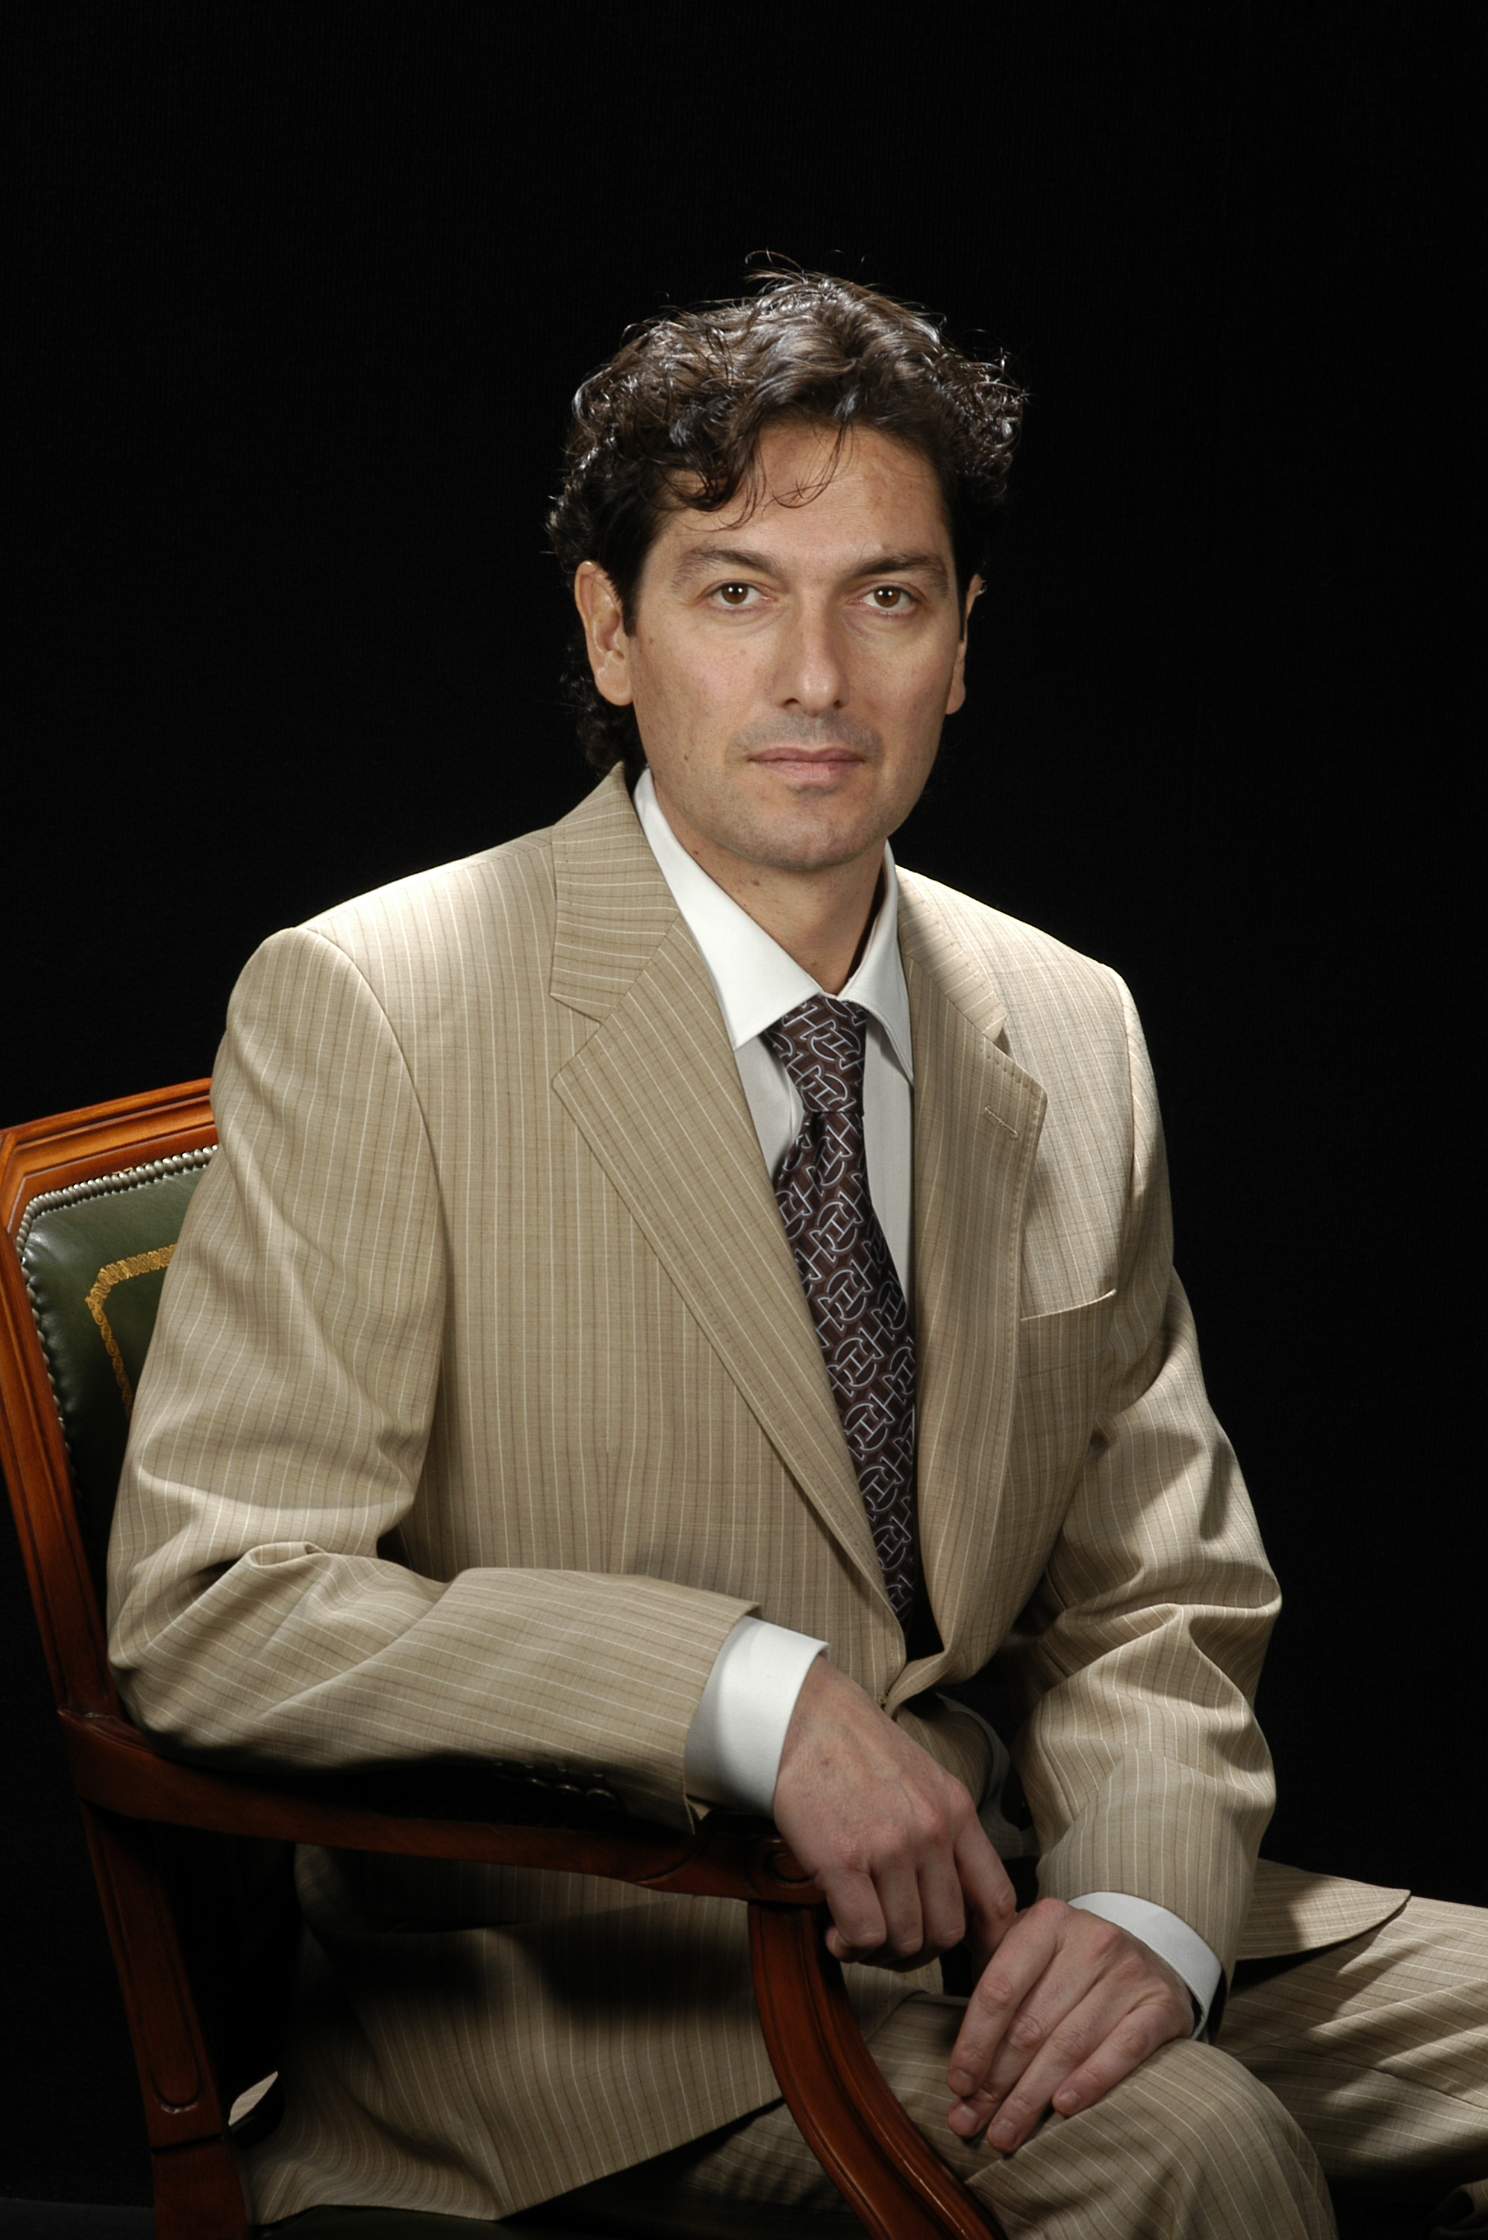 Dr. Jordi Xam-mar Alonso